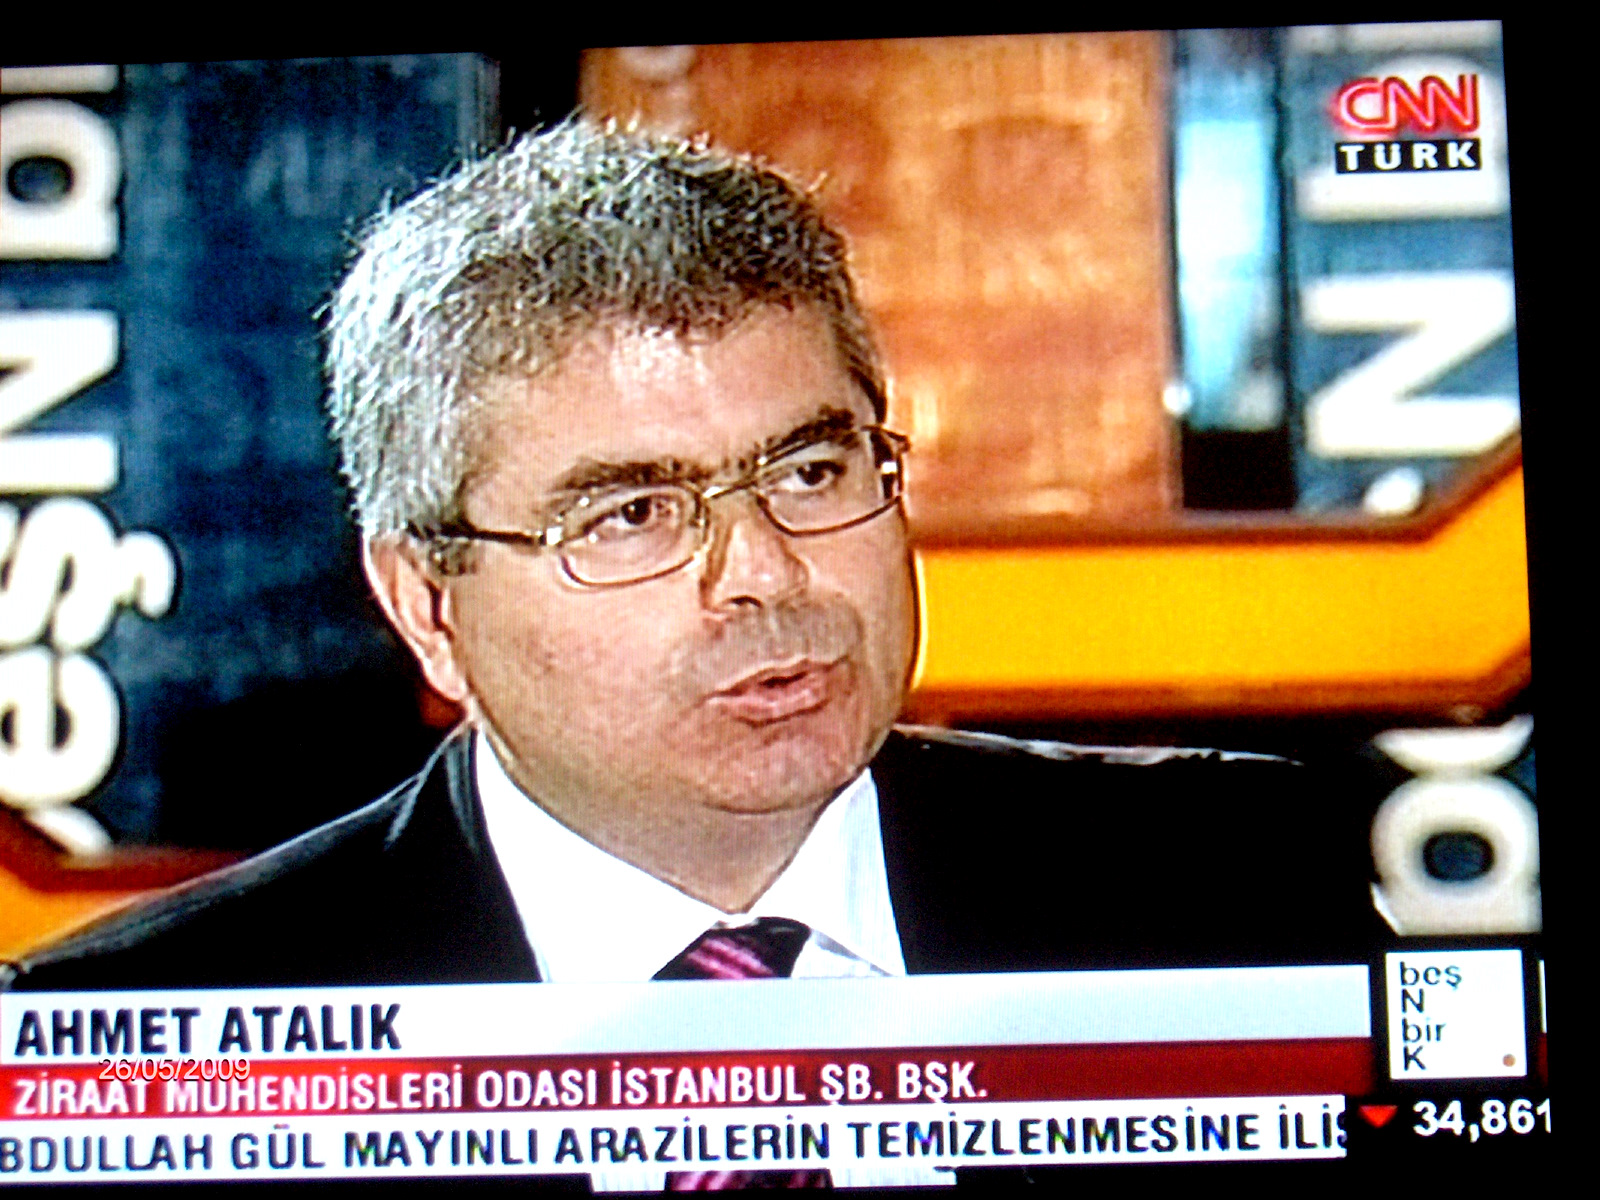 CNN TÜRK-26.05.2009
